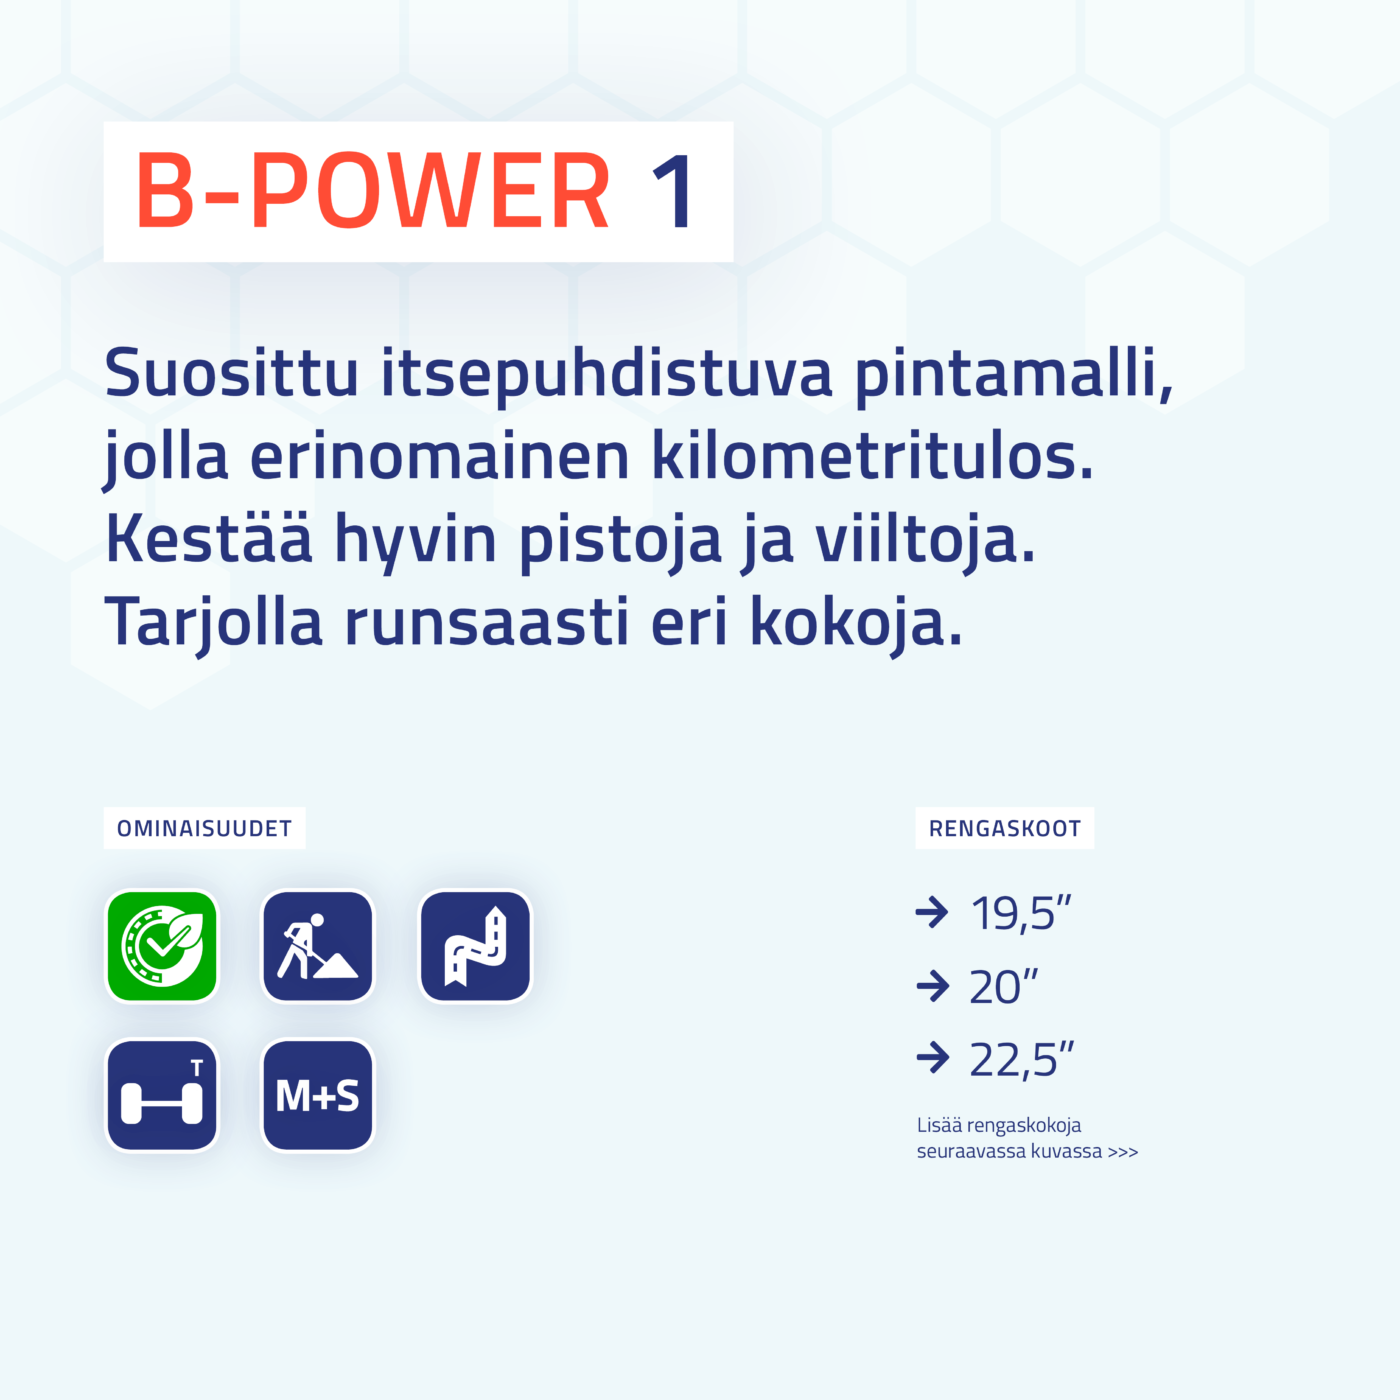 Boss B-POWER 1